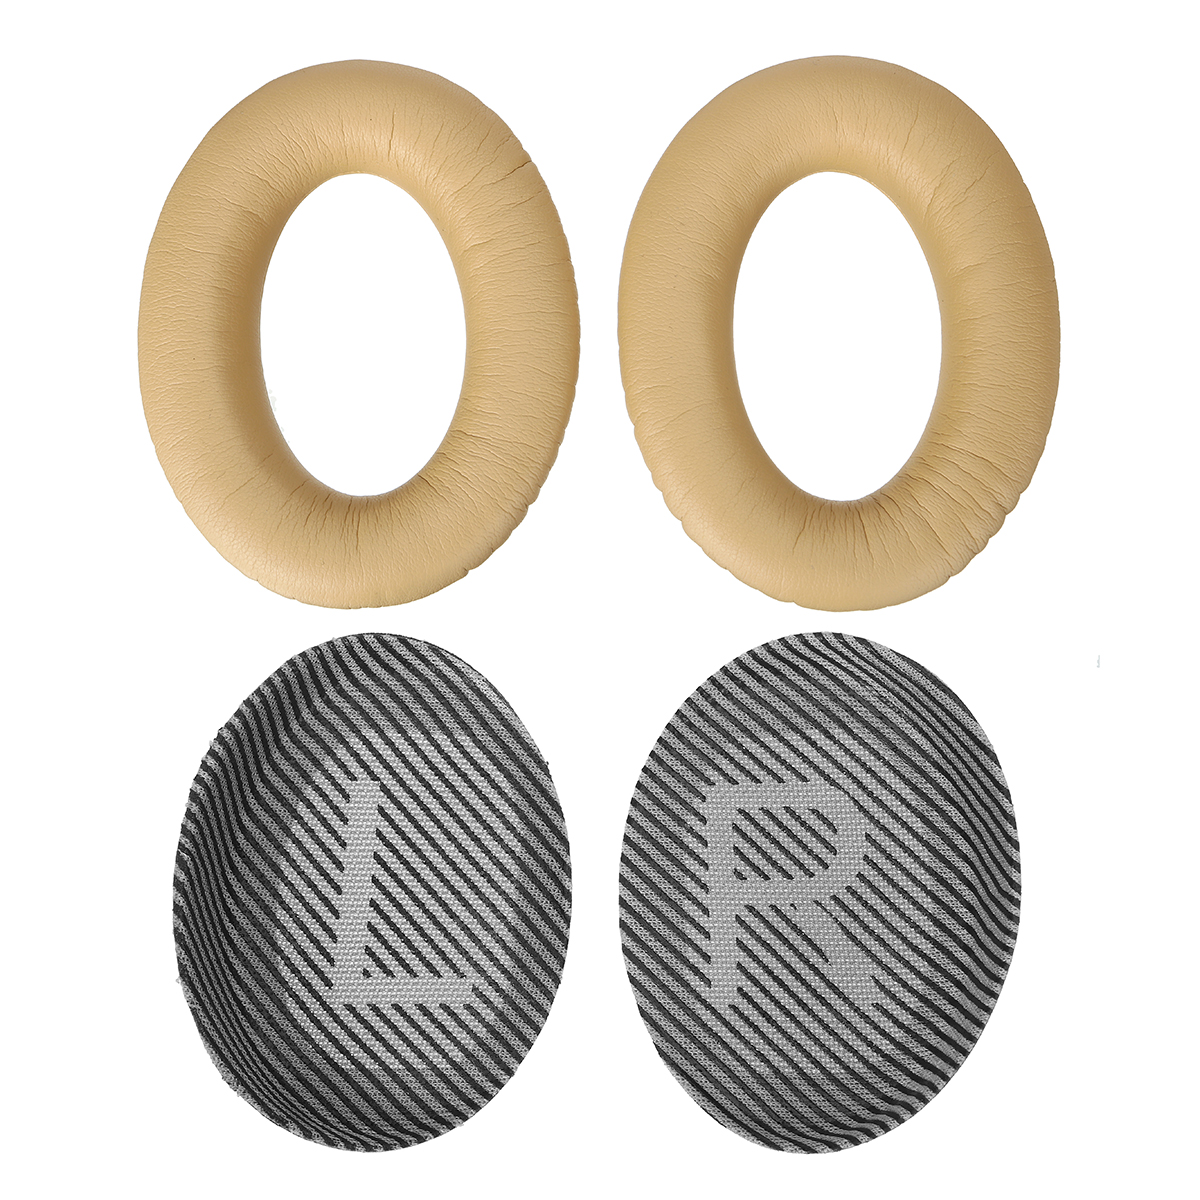 Replacement-Soft-Sponge-Headphone-Earpads-Cushion-for-BOSEQC2-QC25-QC35-QC15-1617364-4